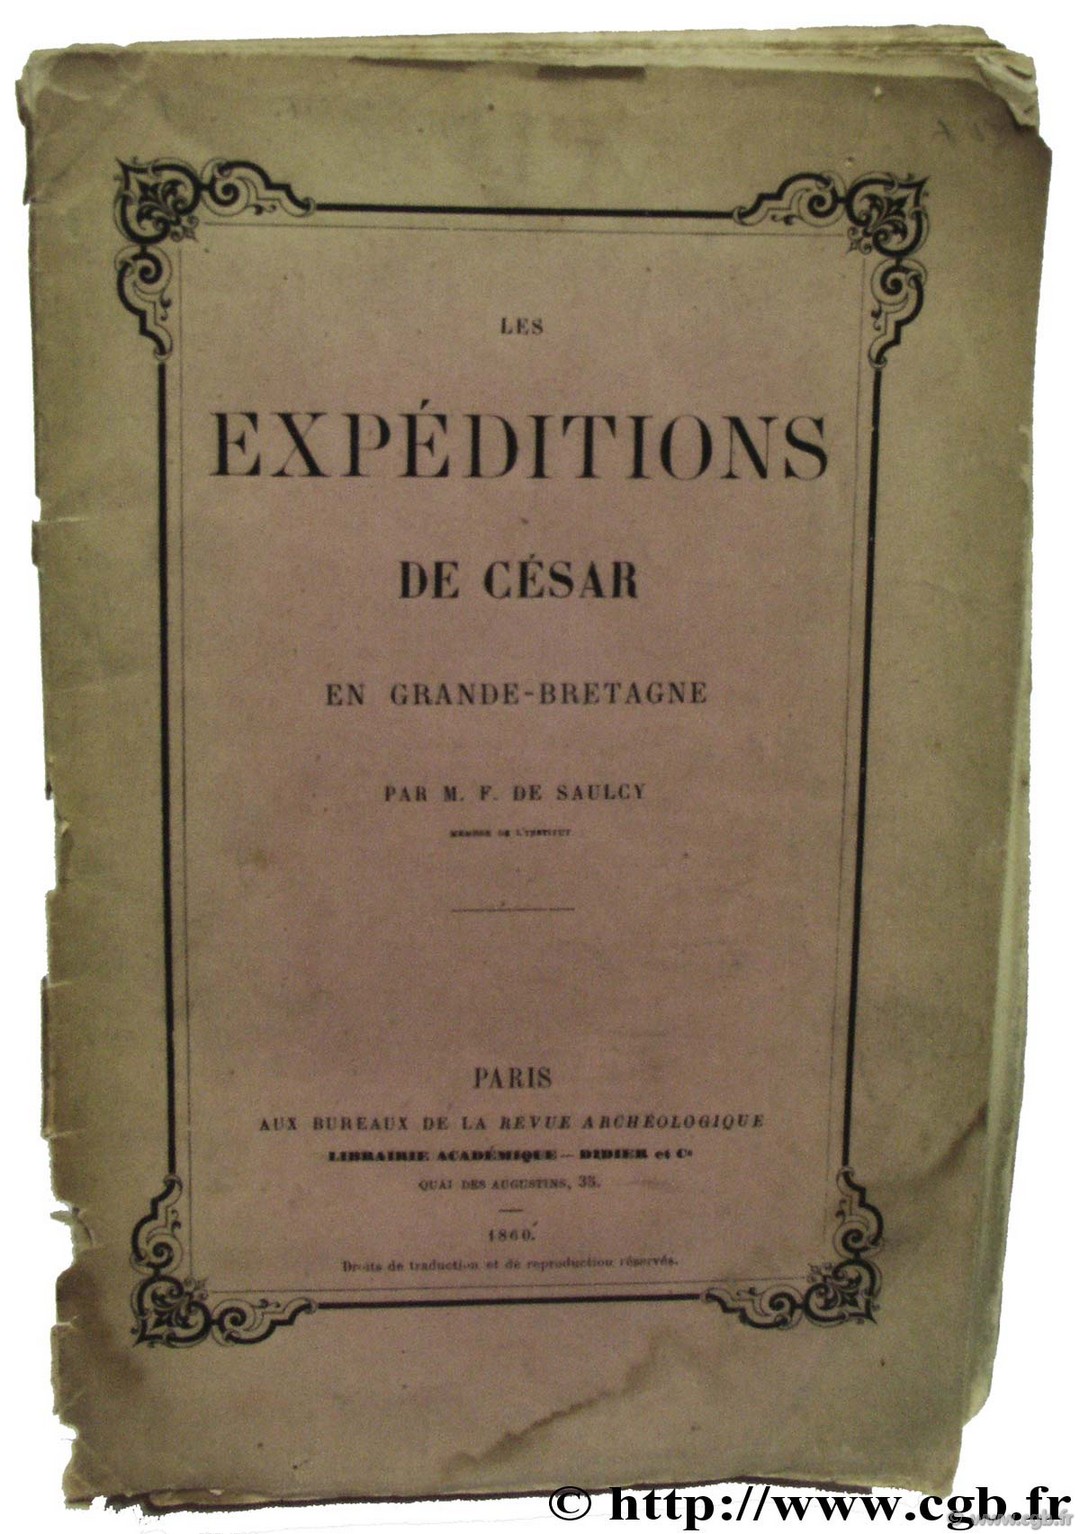 Les expéditions de César en Grande-Bretagne SAULCY F. de